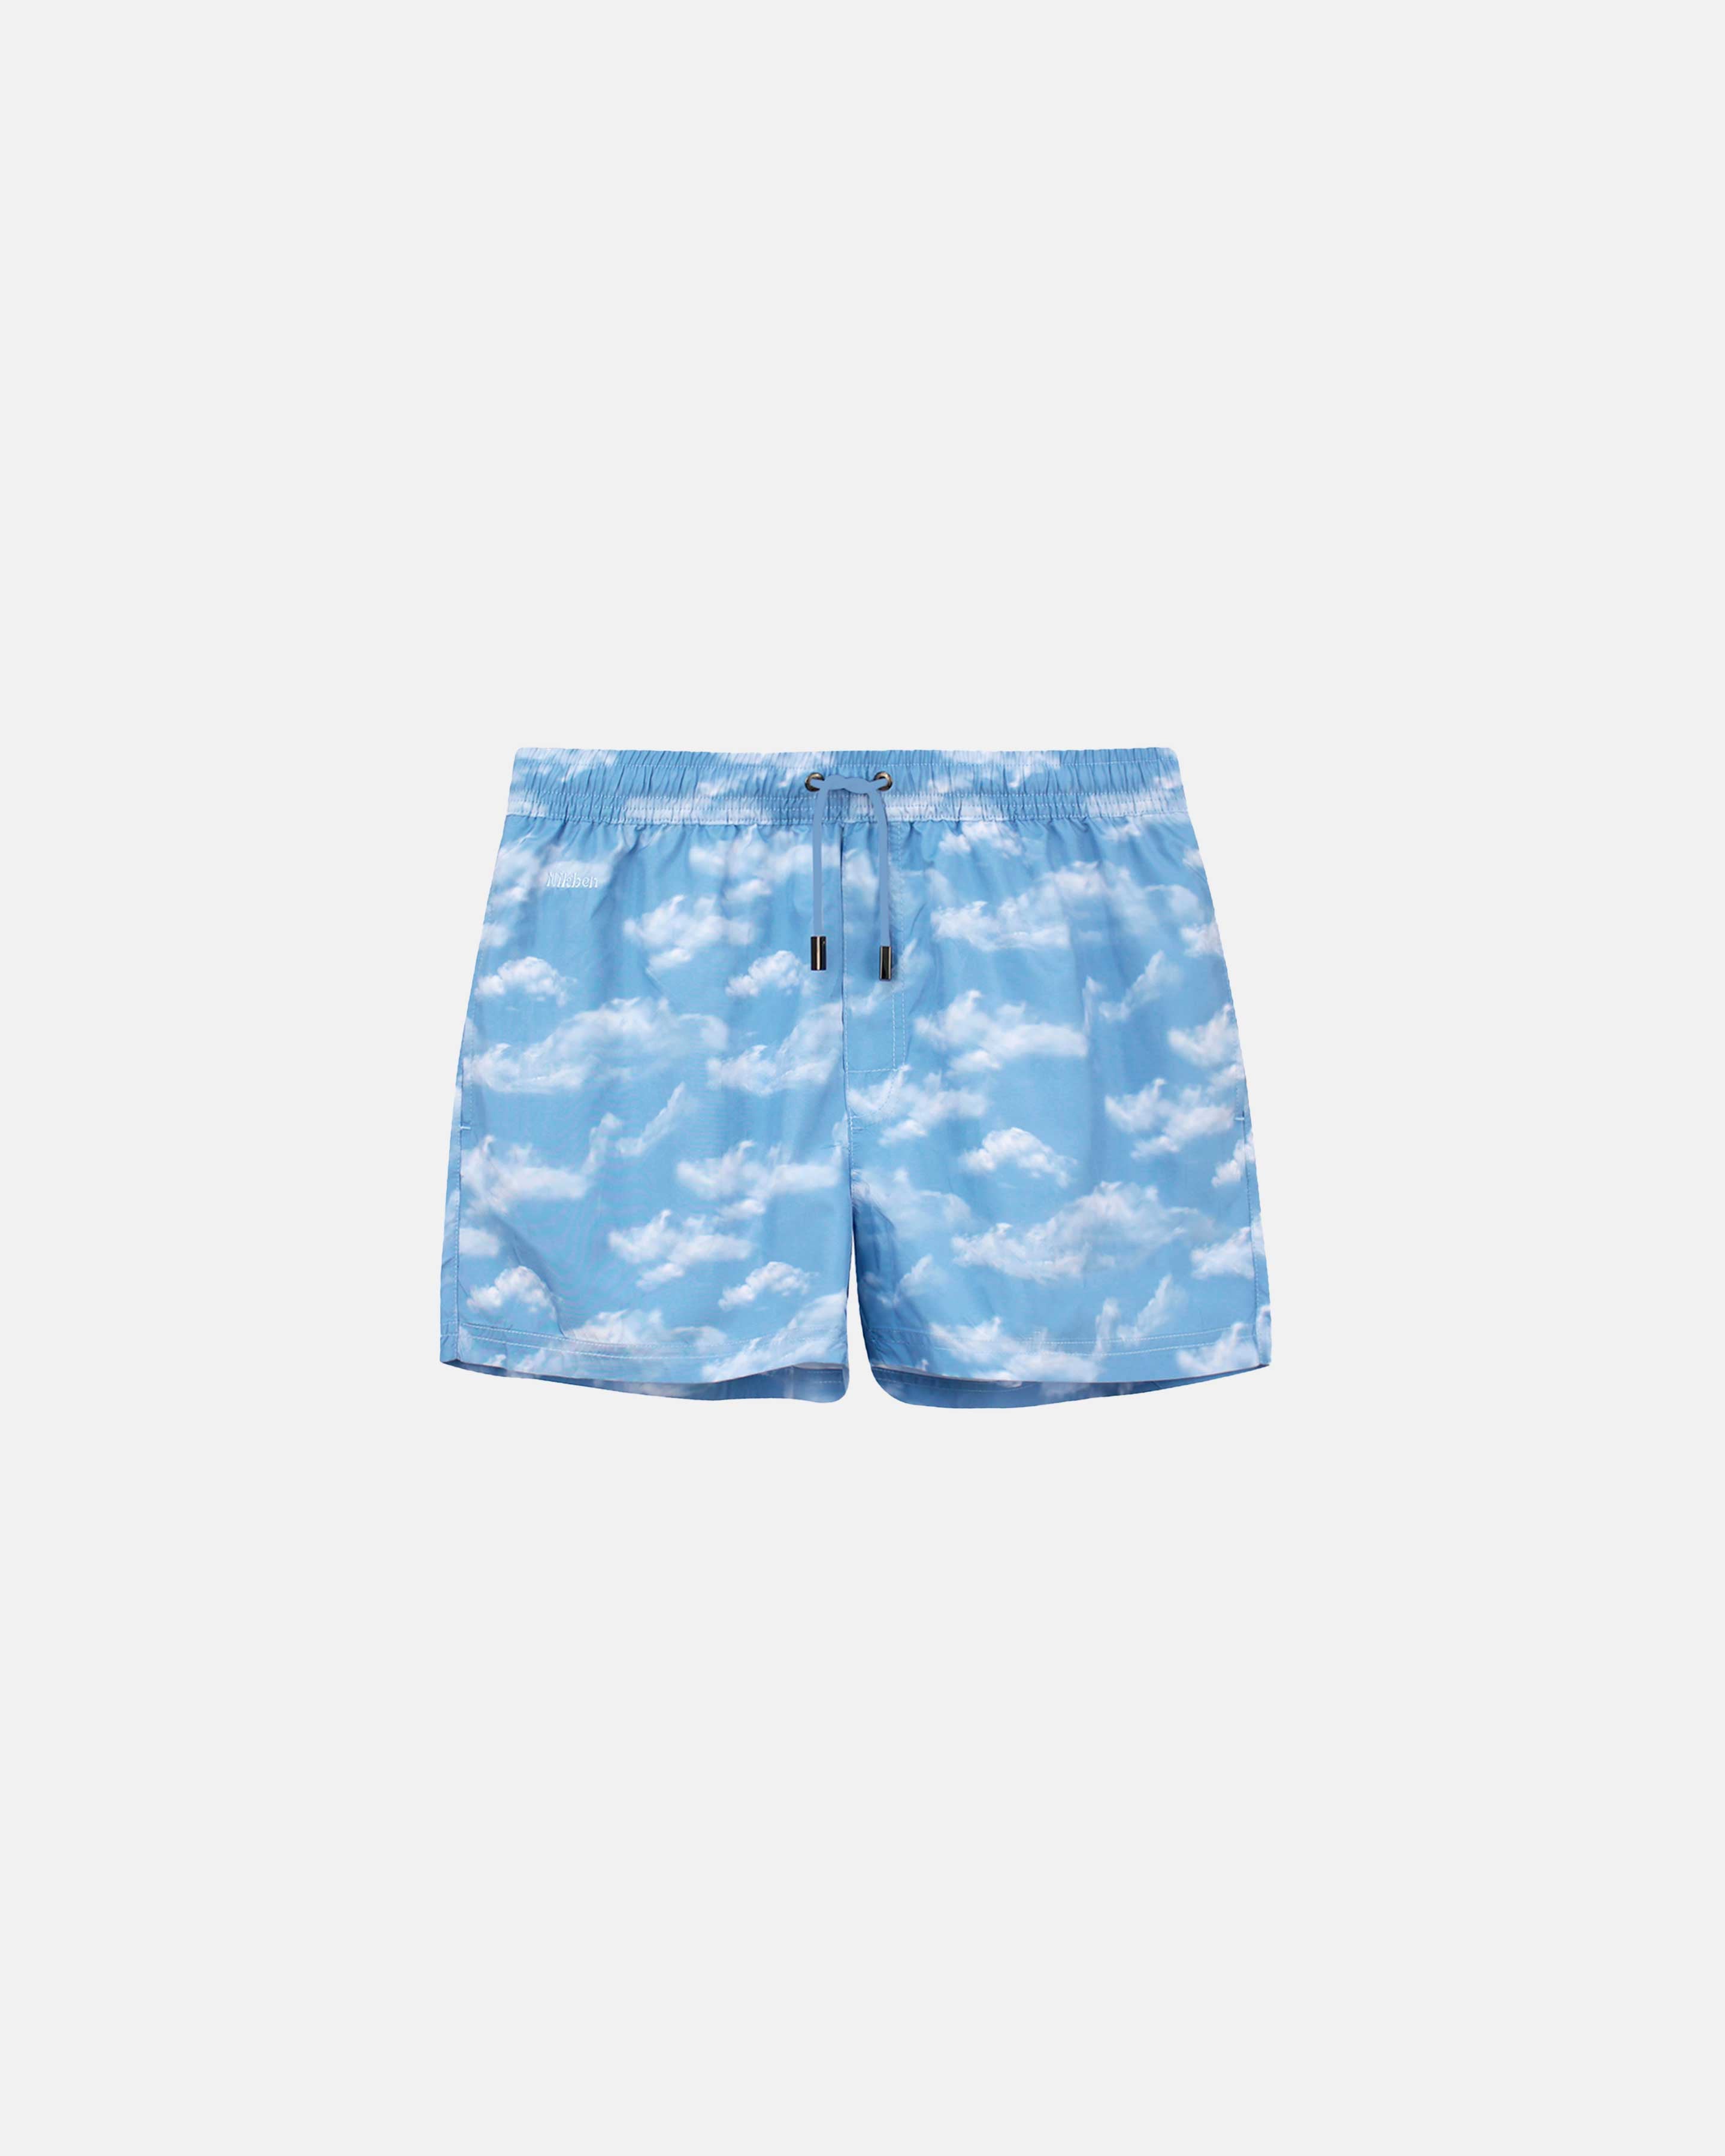 Light blue swim trunks with cloud print, logo and drawstring